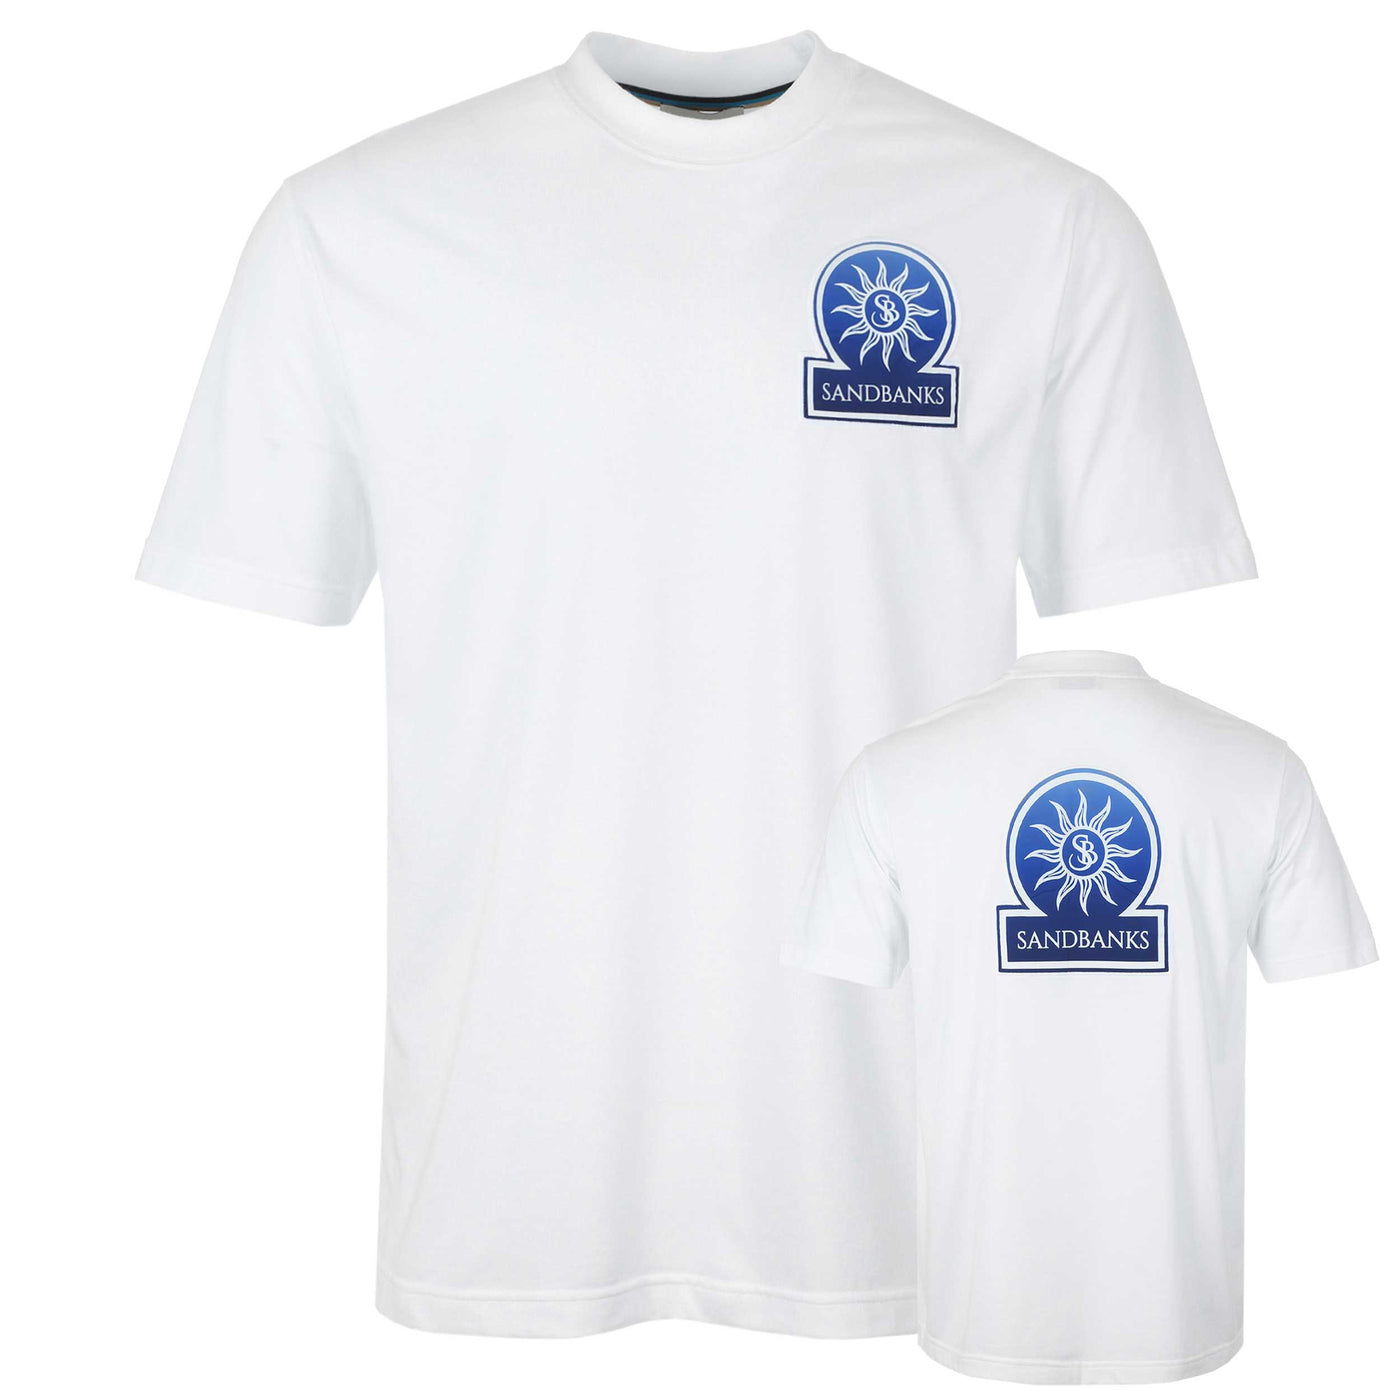 Sandbanks Resort Applique Logo T Shirt in White & Navy